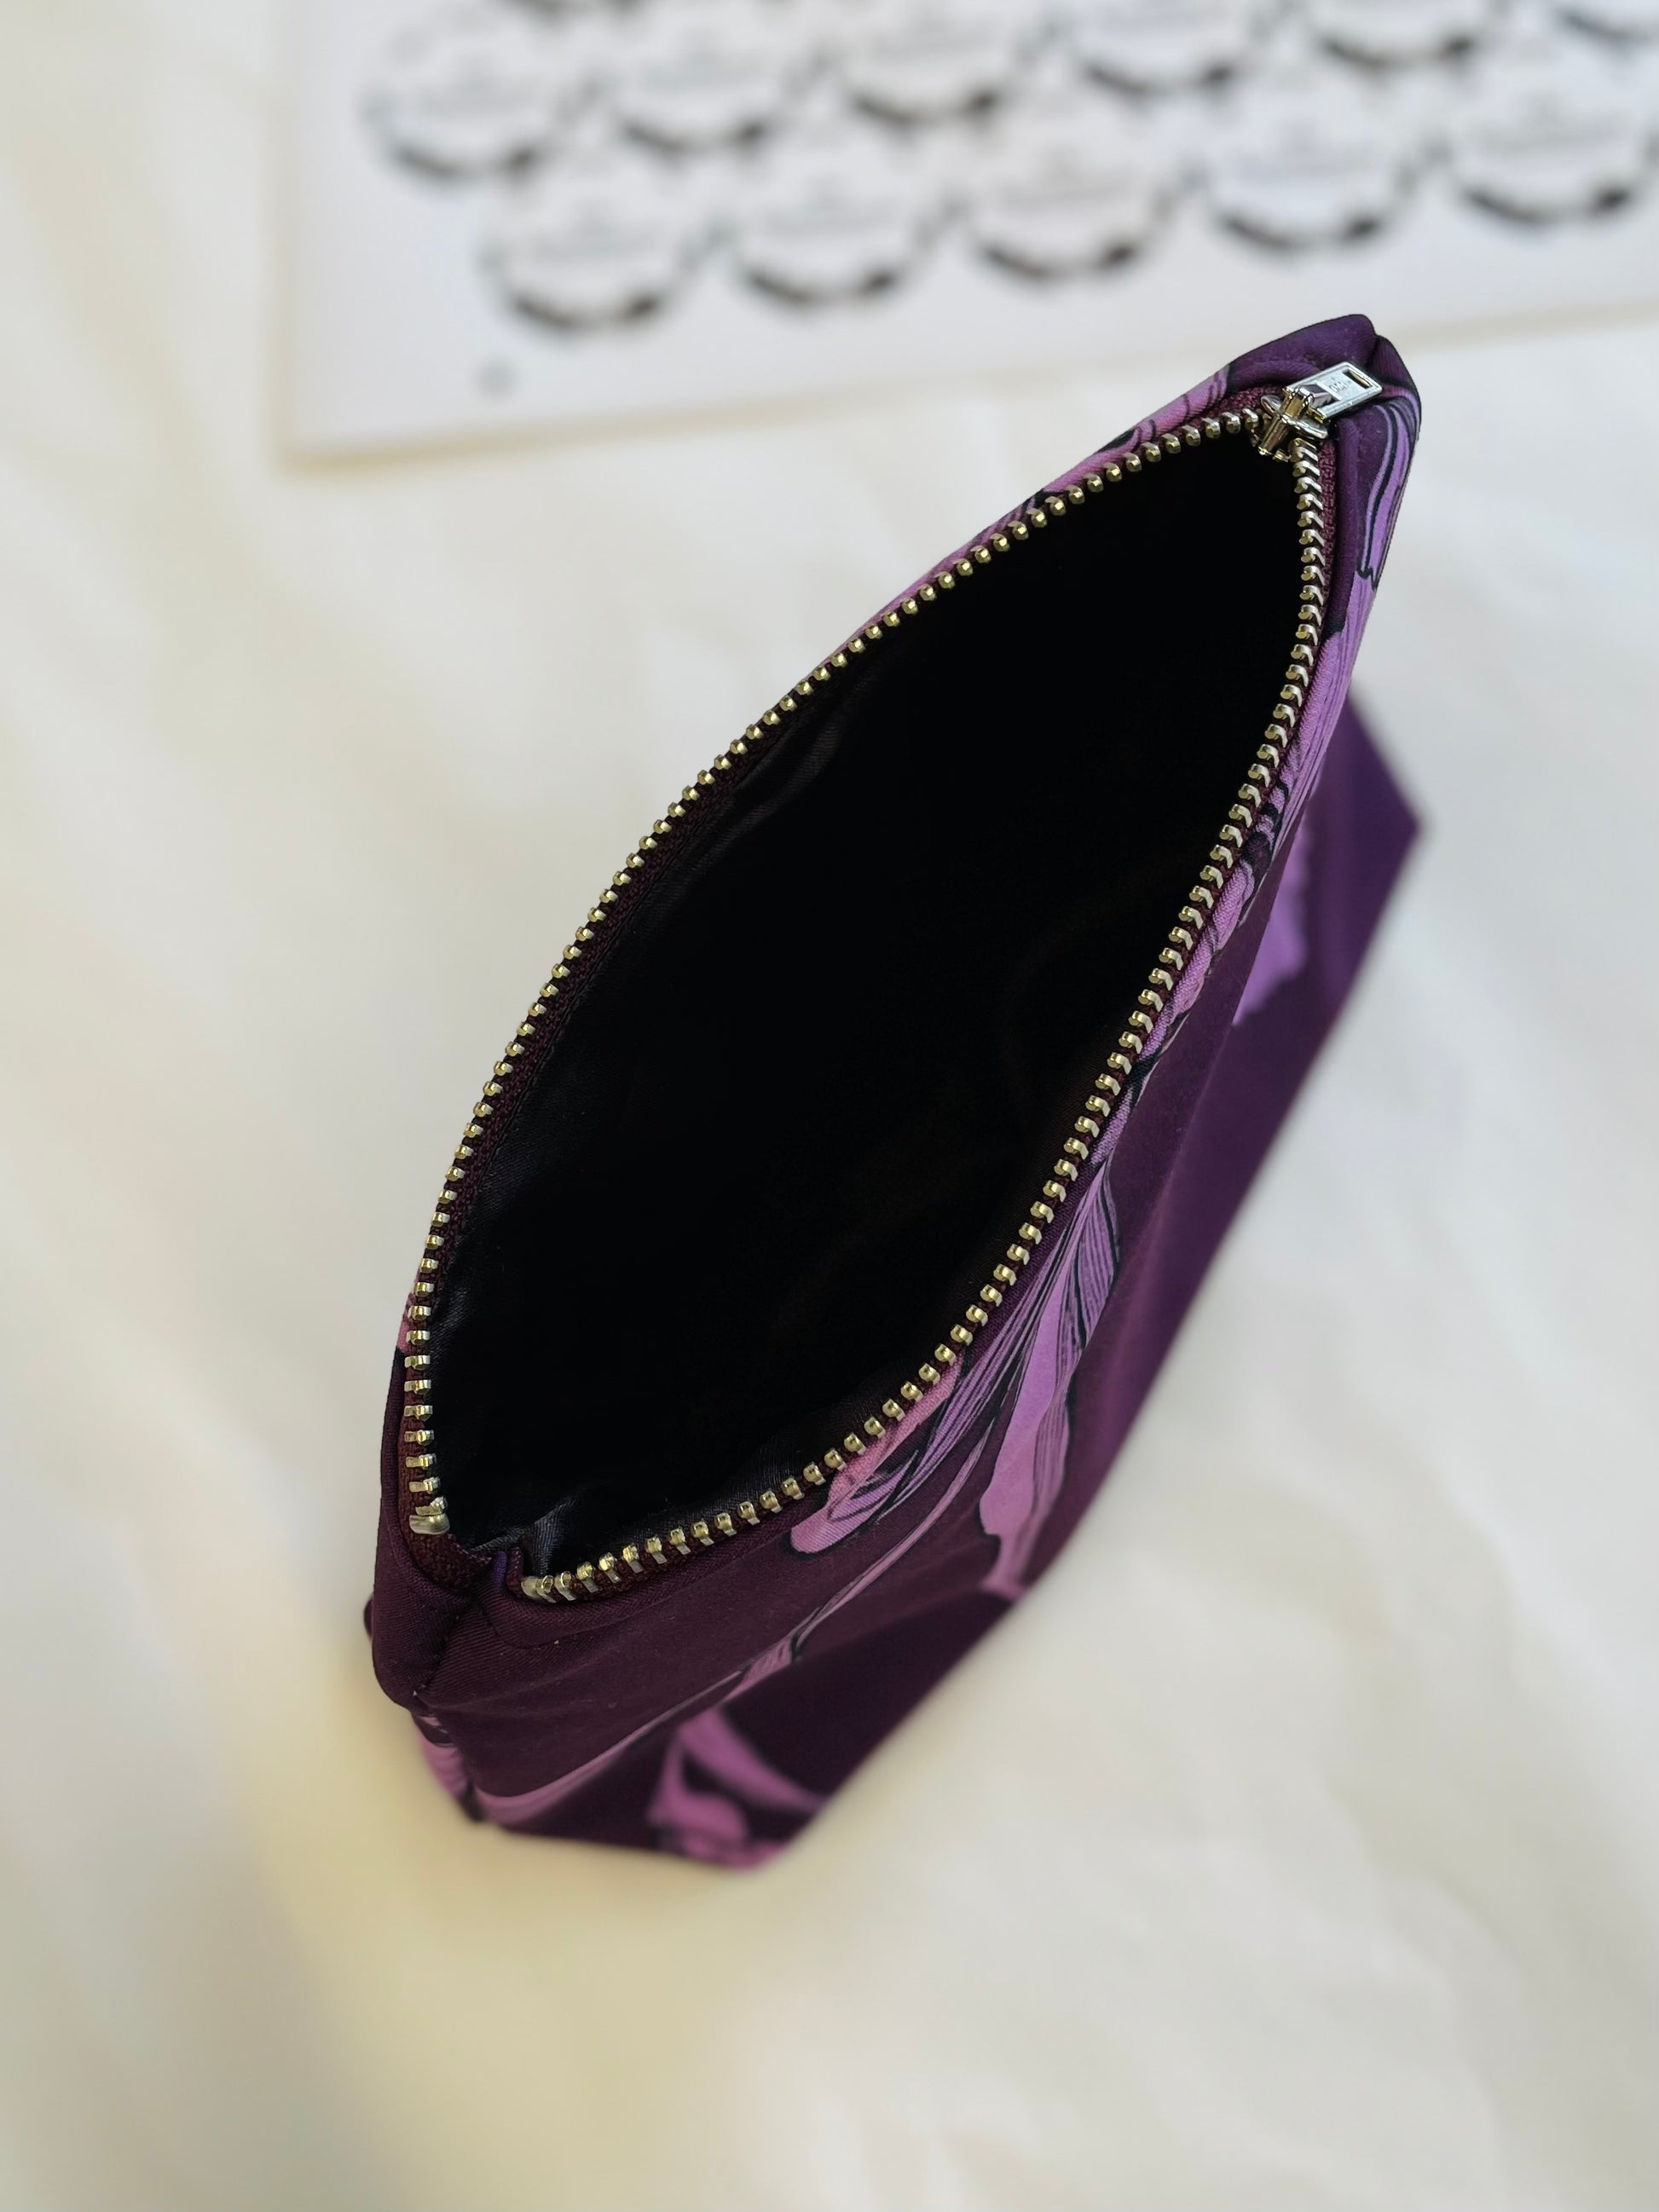 purple floral makeup bag with black lining